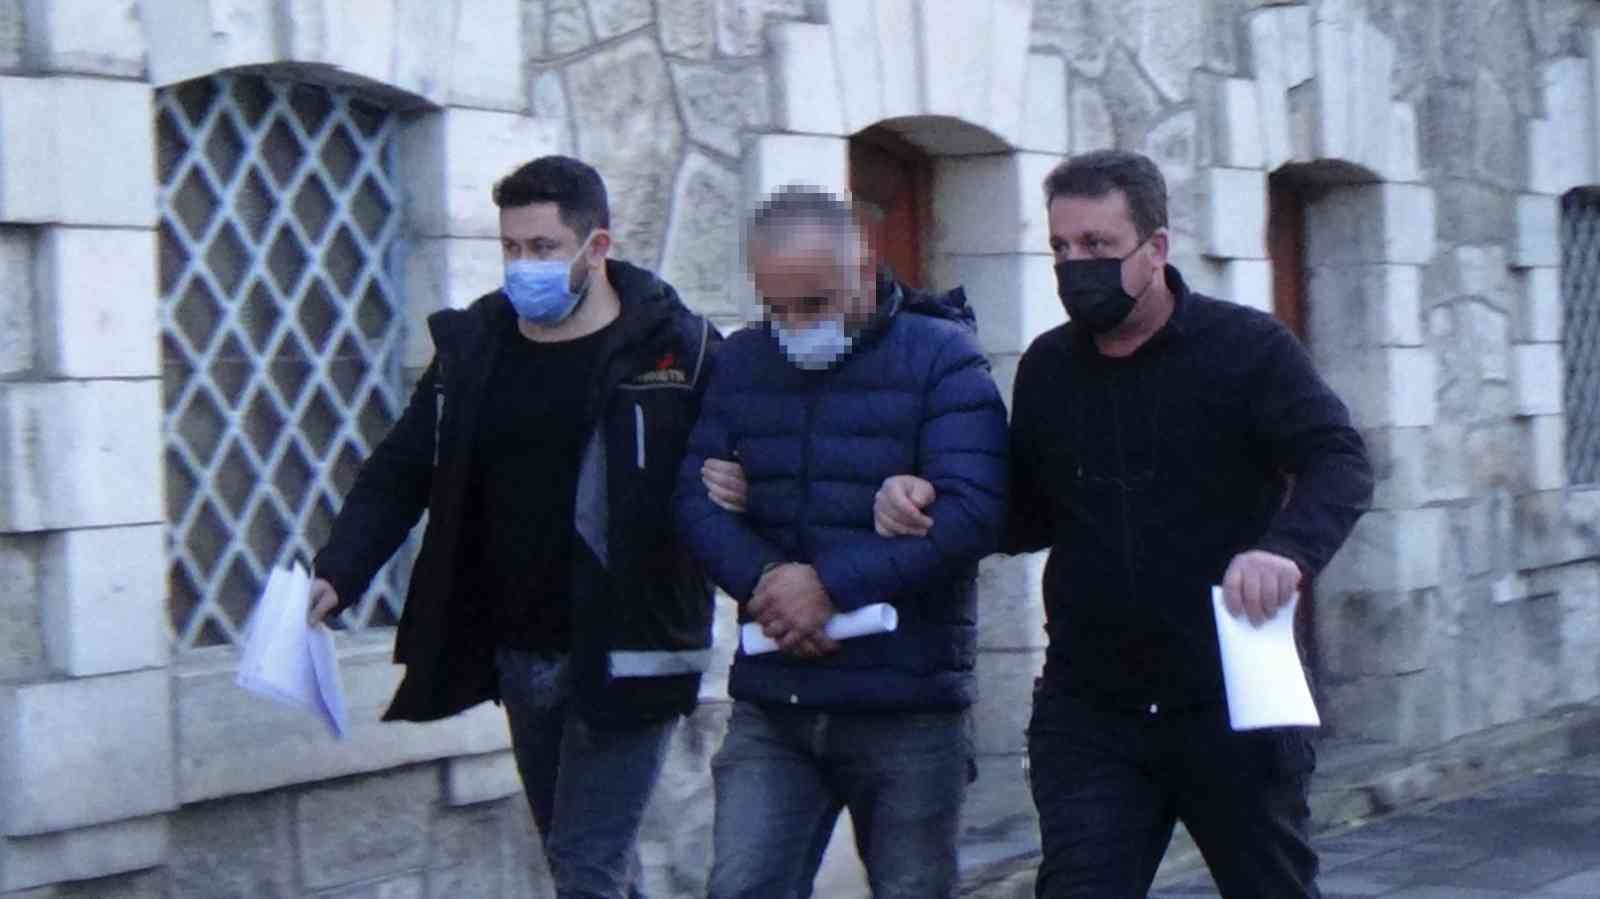 Kütahya’daki uyuşturucu operasyonuna 1 tutuklama #kutahya